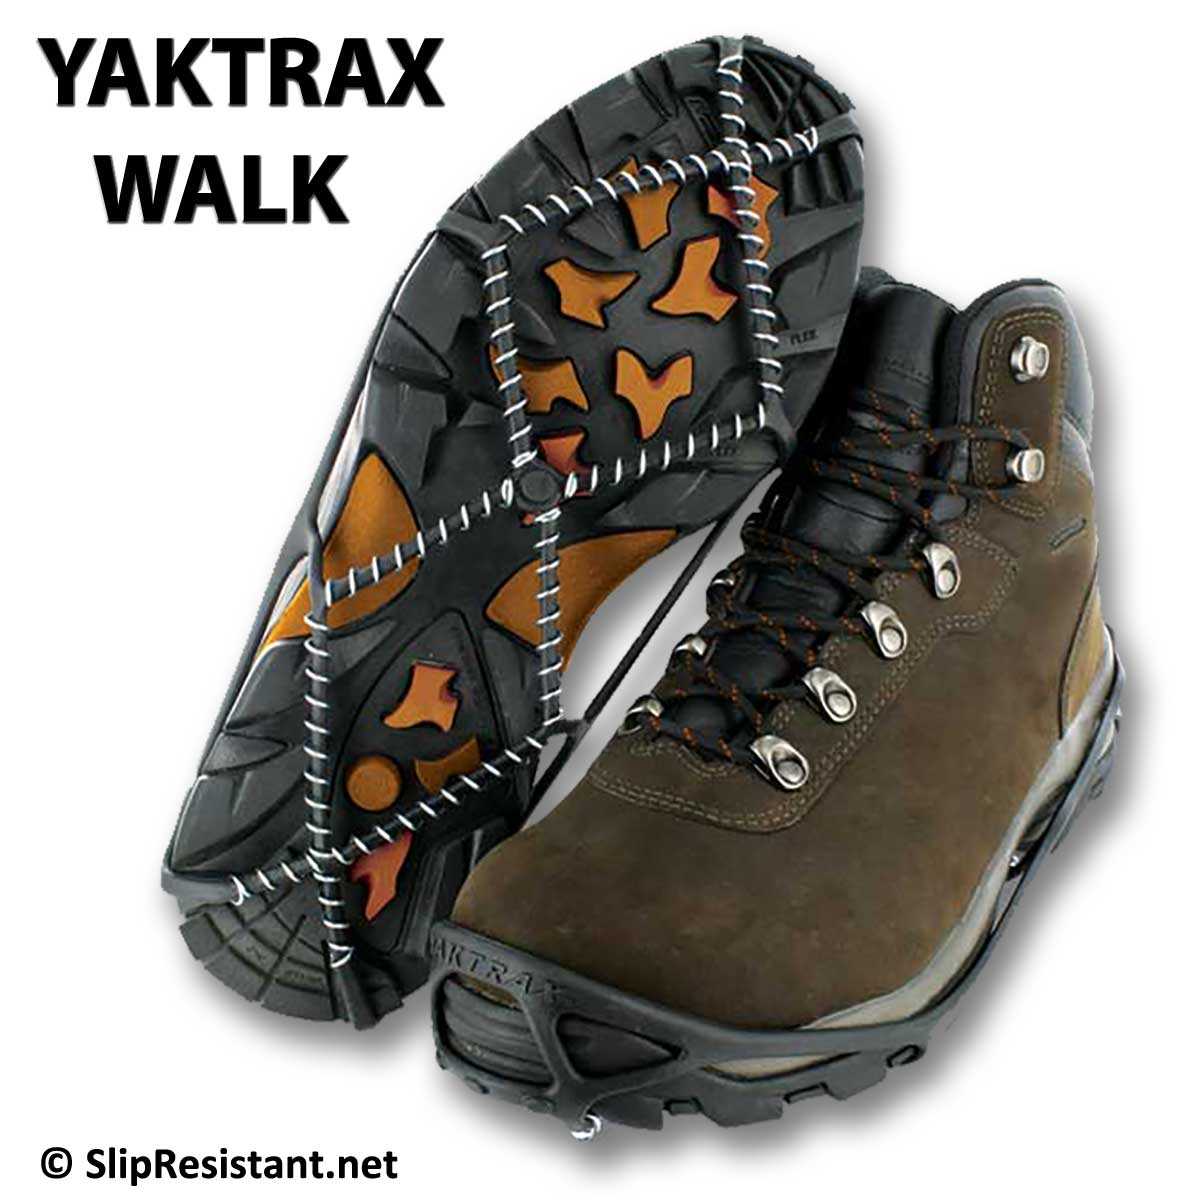 Yaktrax Walk Traction Cleats